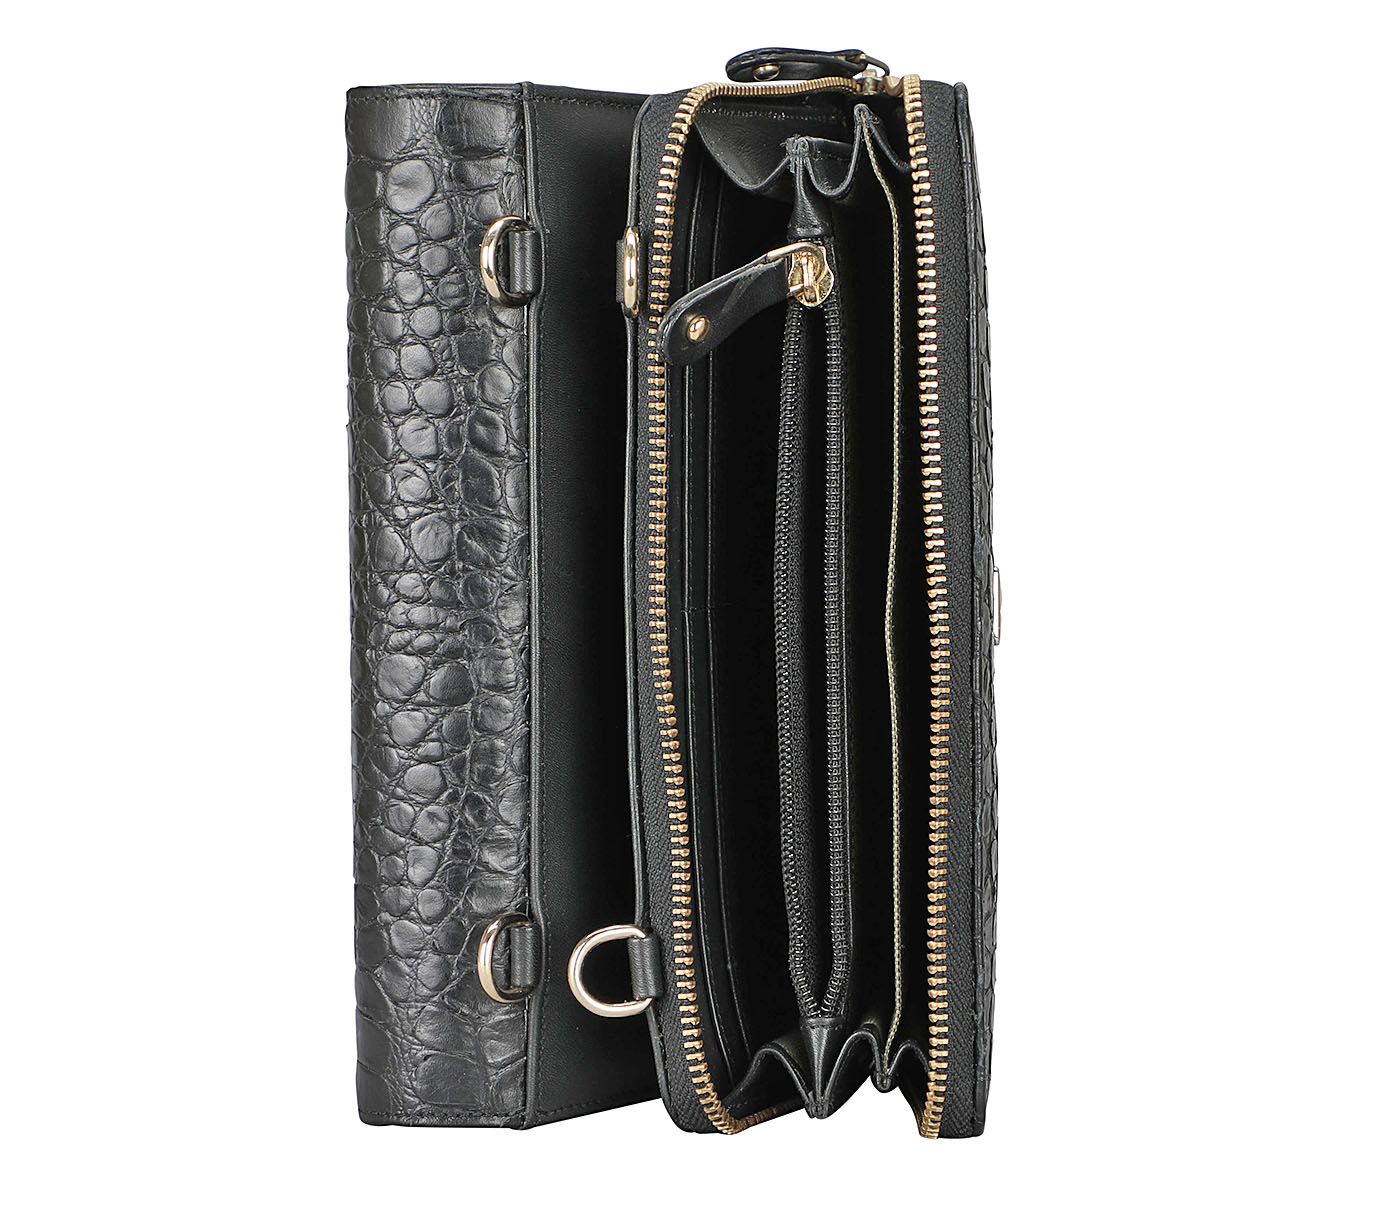 B878-Elisa-Sling cross body bag with detachable clutch in genuine leather - Black